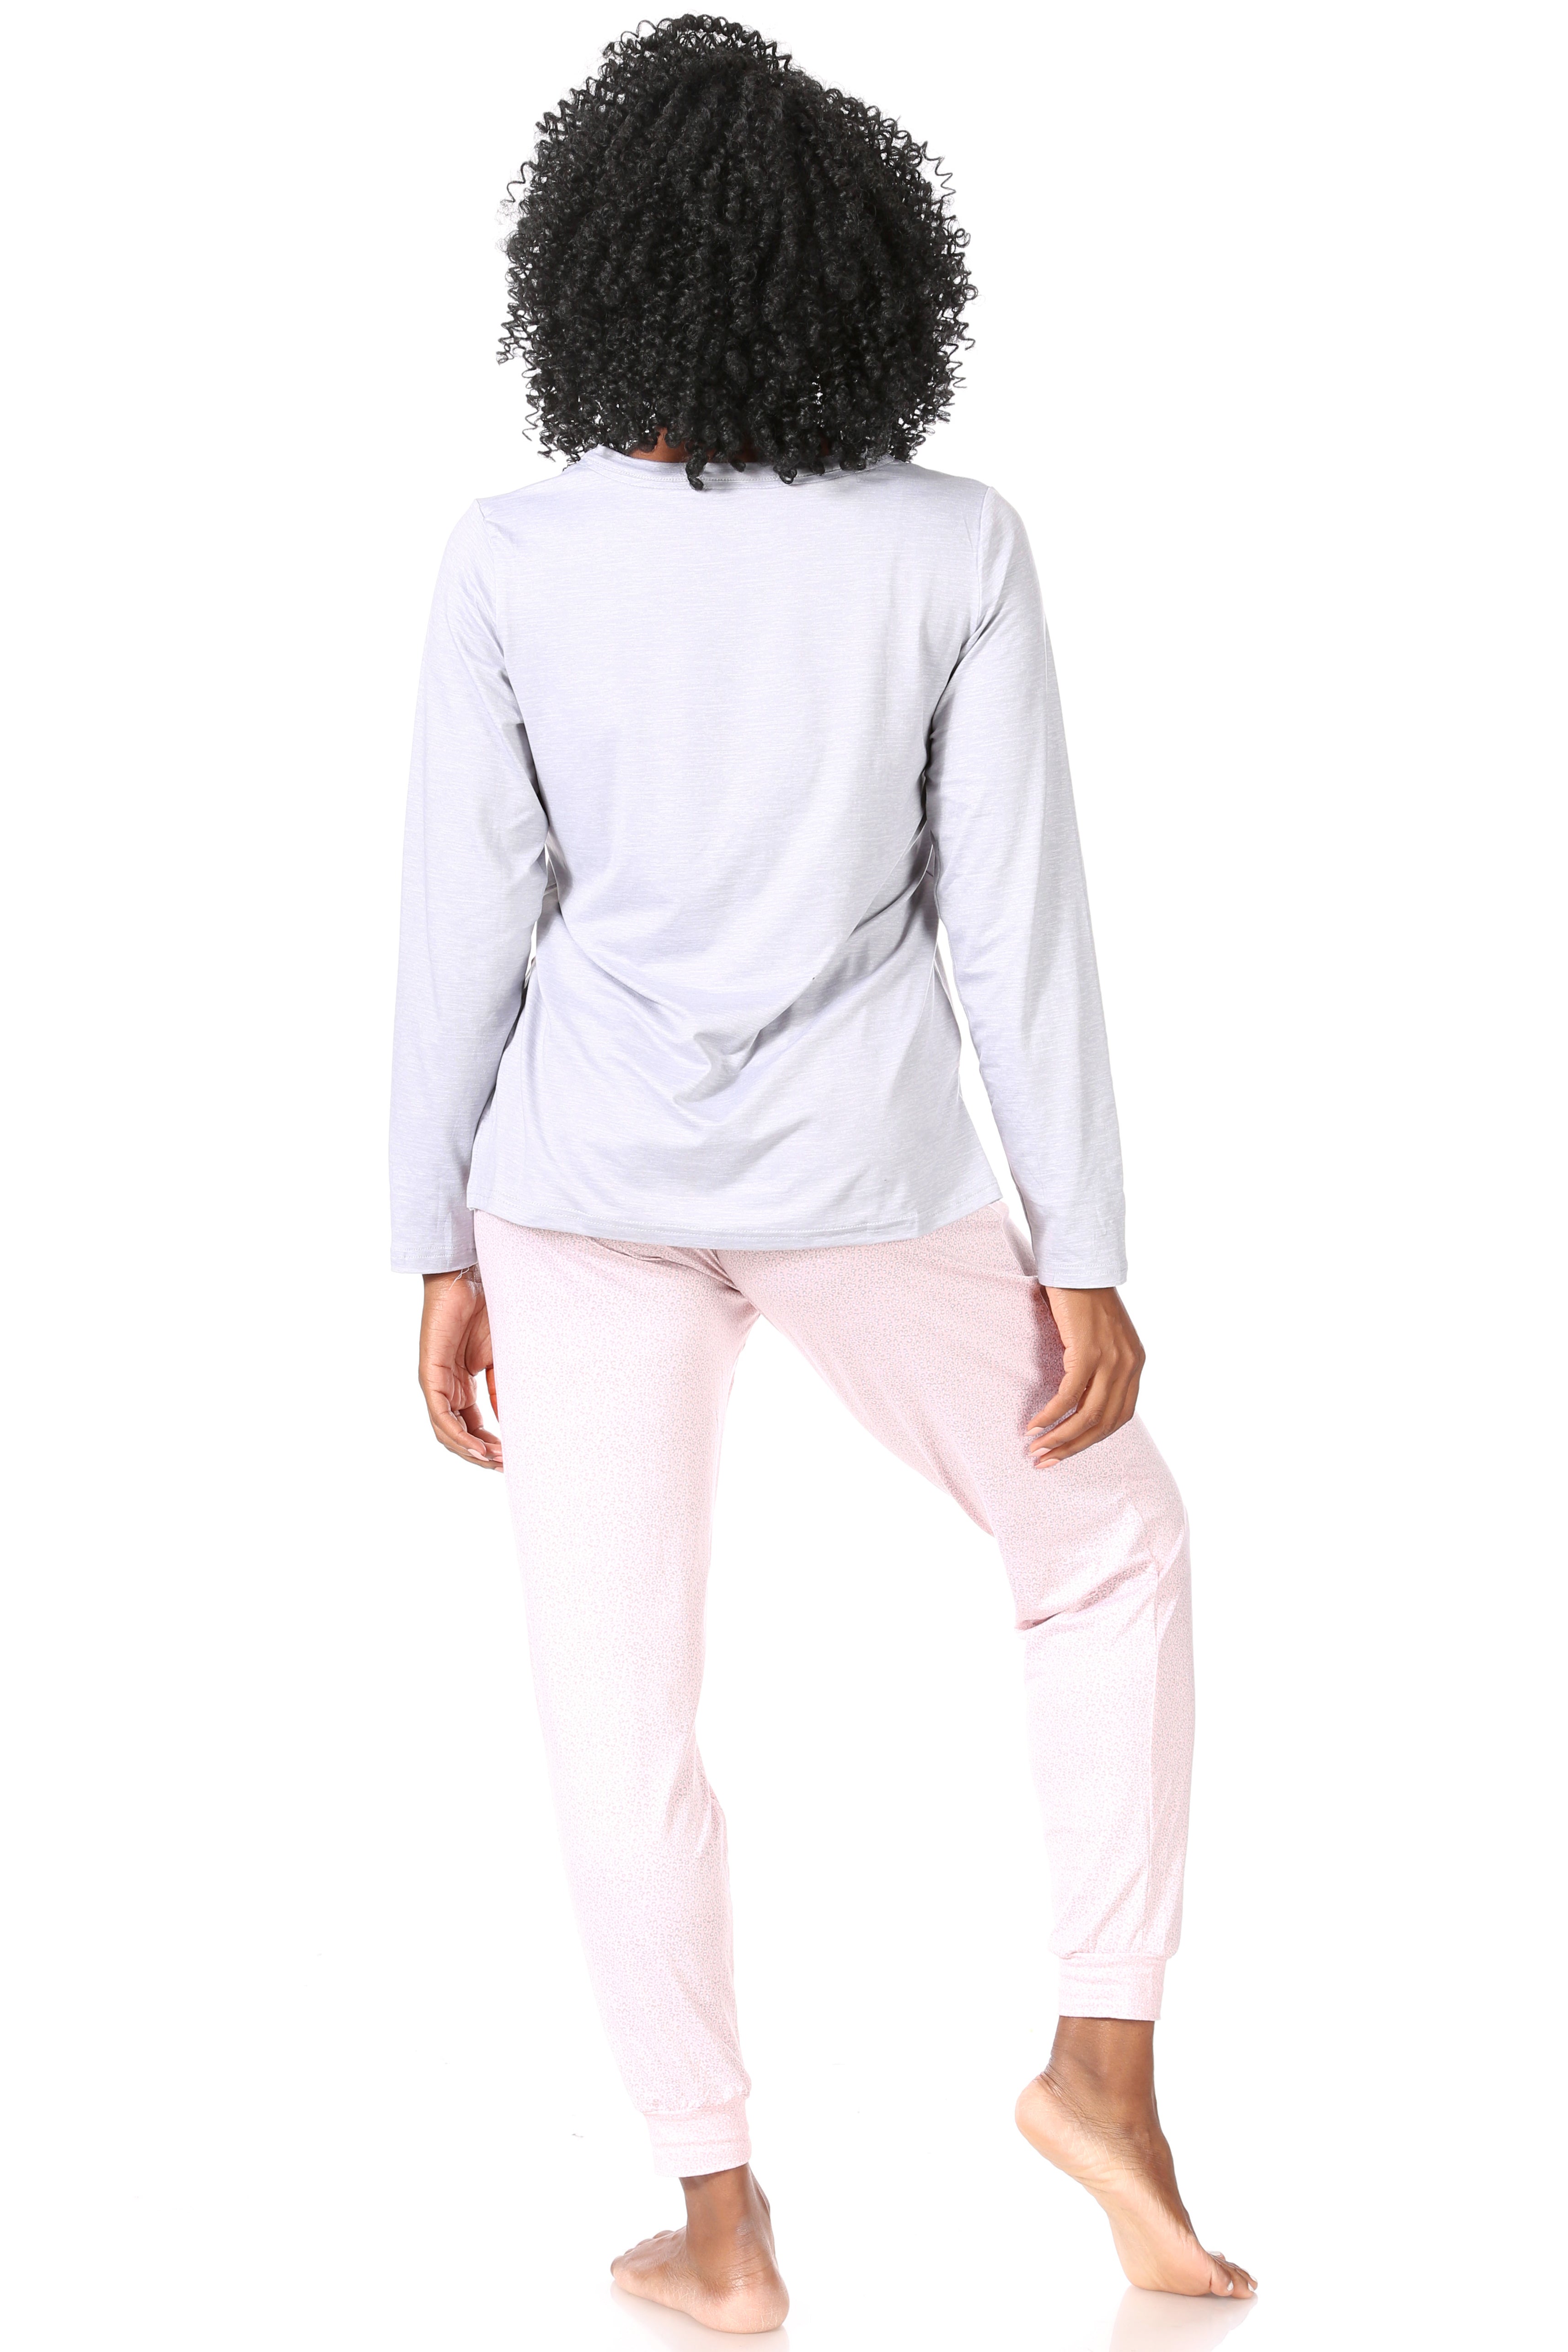 Women's "SNOOZE" Long Sleeve Top and Jogger Pajama Set - Rae Dunn Wear